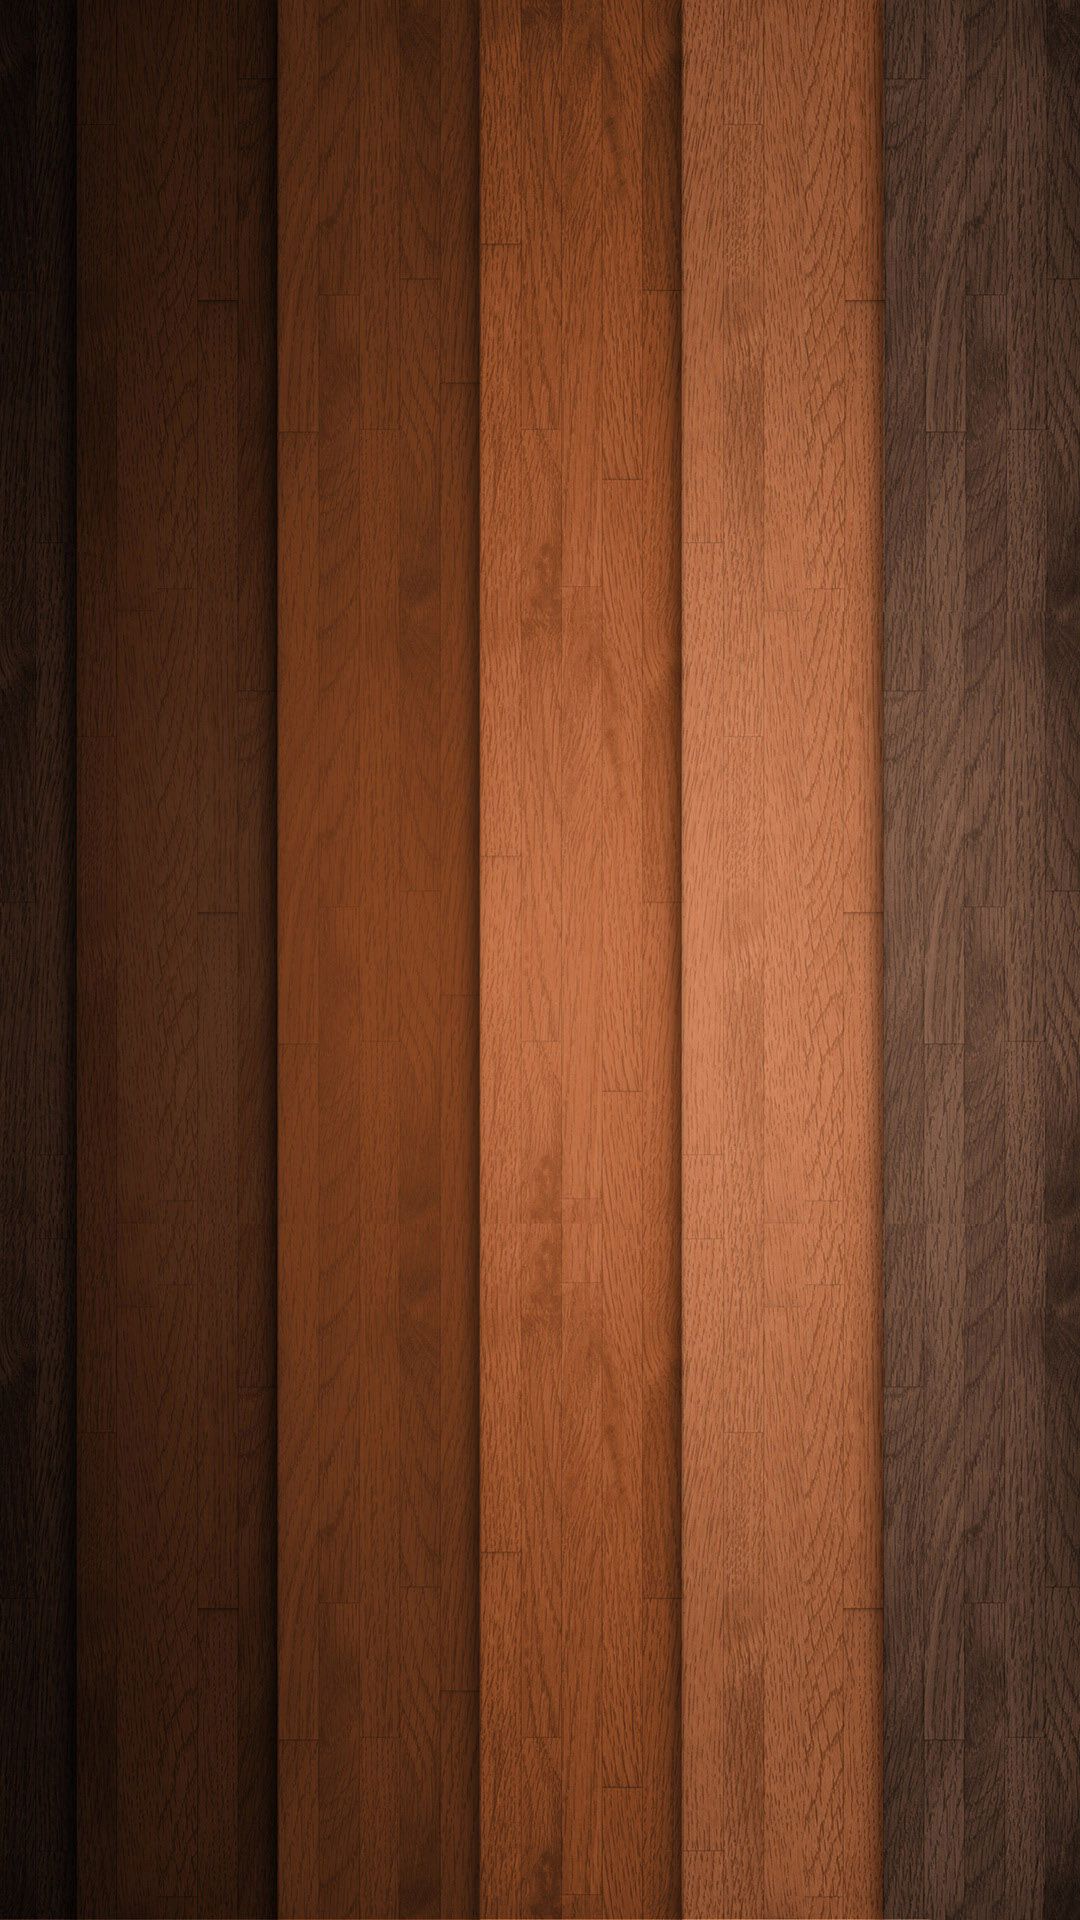 Fondo de textura de tablones de madera tonos de marrón Android Wallpaper